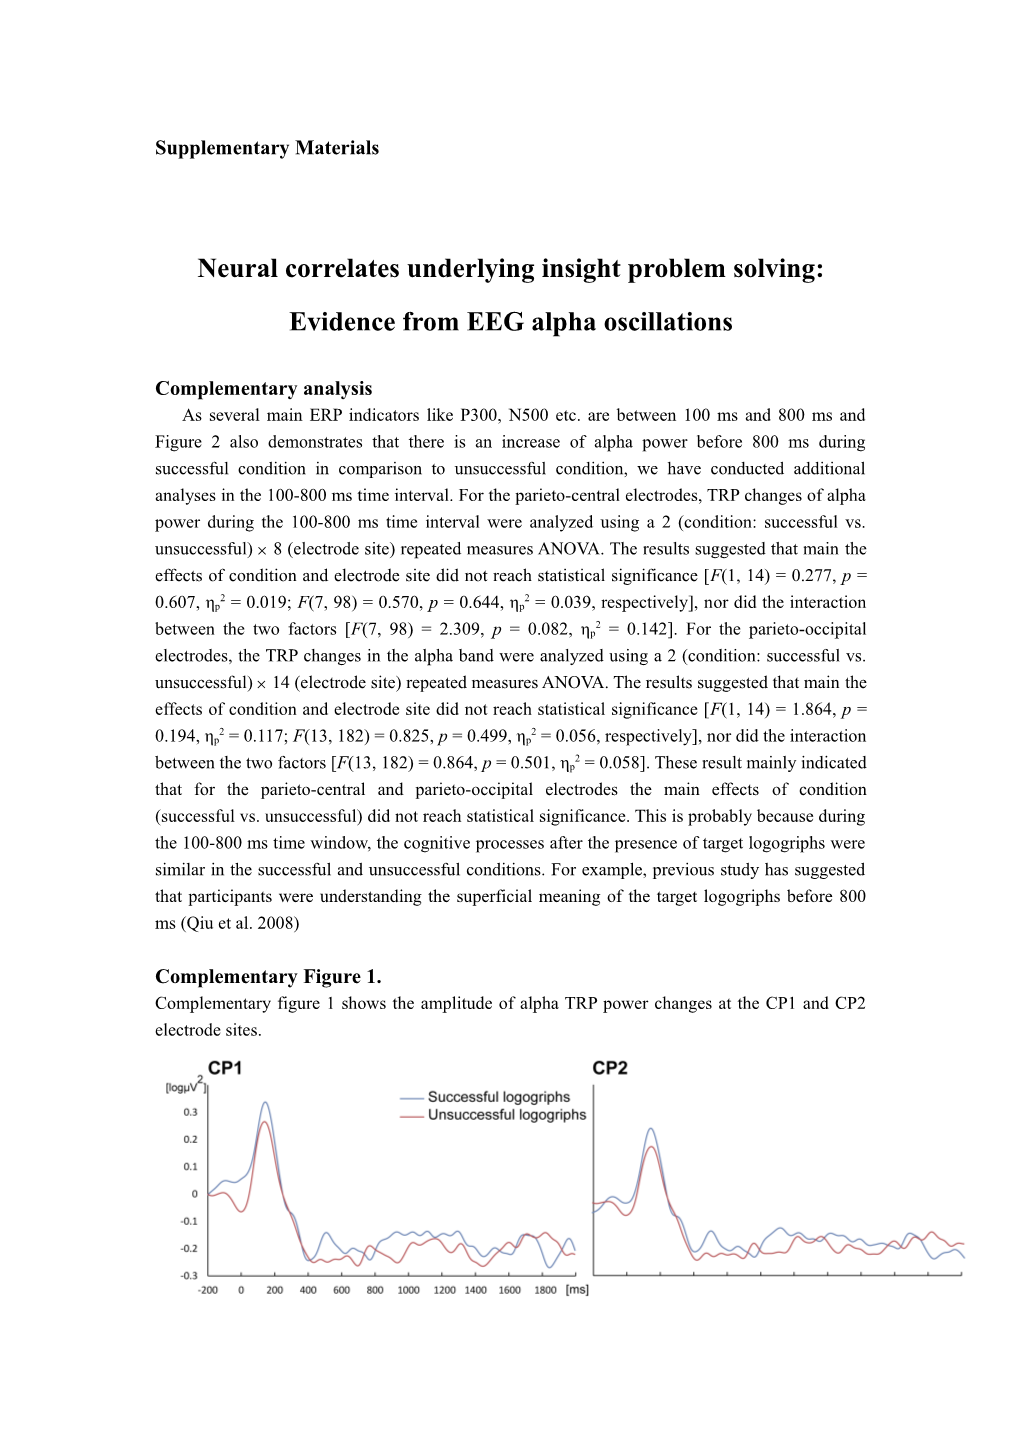 Neural Correlates Underlying Insight Problem Solving: Evidence from EEG Alpha Oscillations